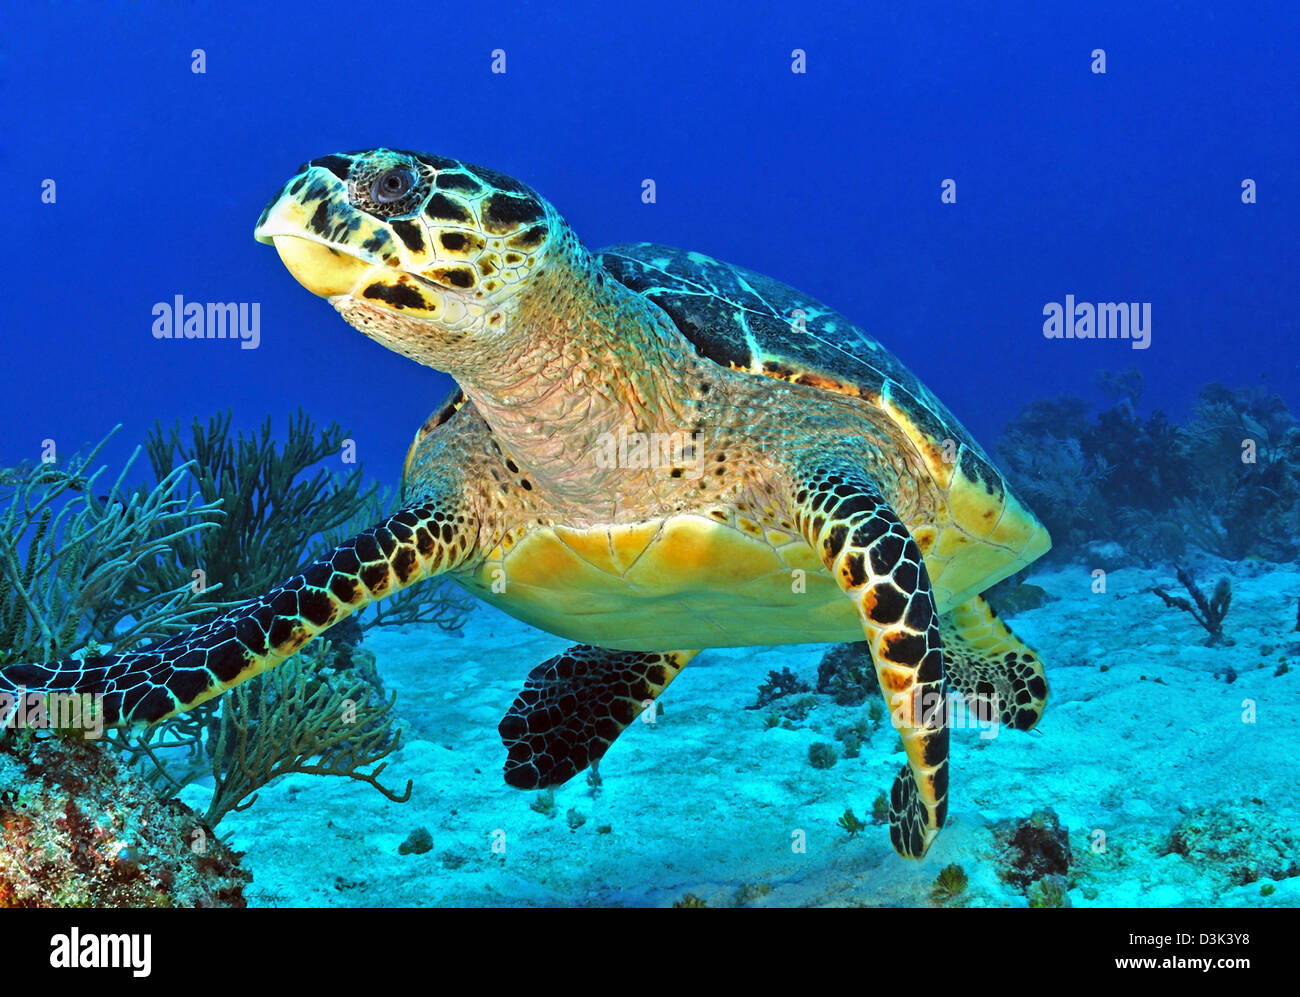 Hawskbill turtle on caribbean reef. Stock Photo